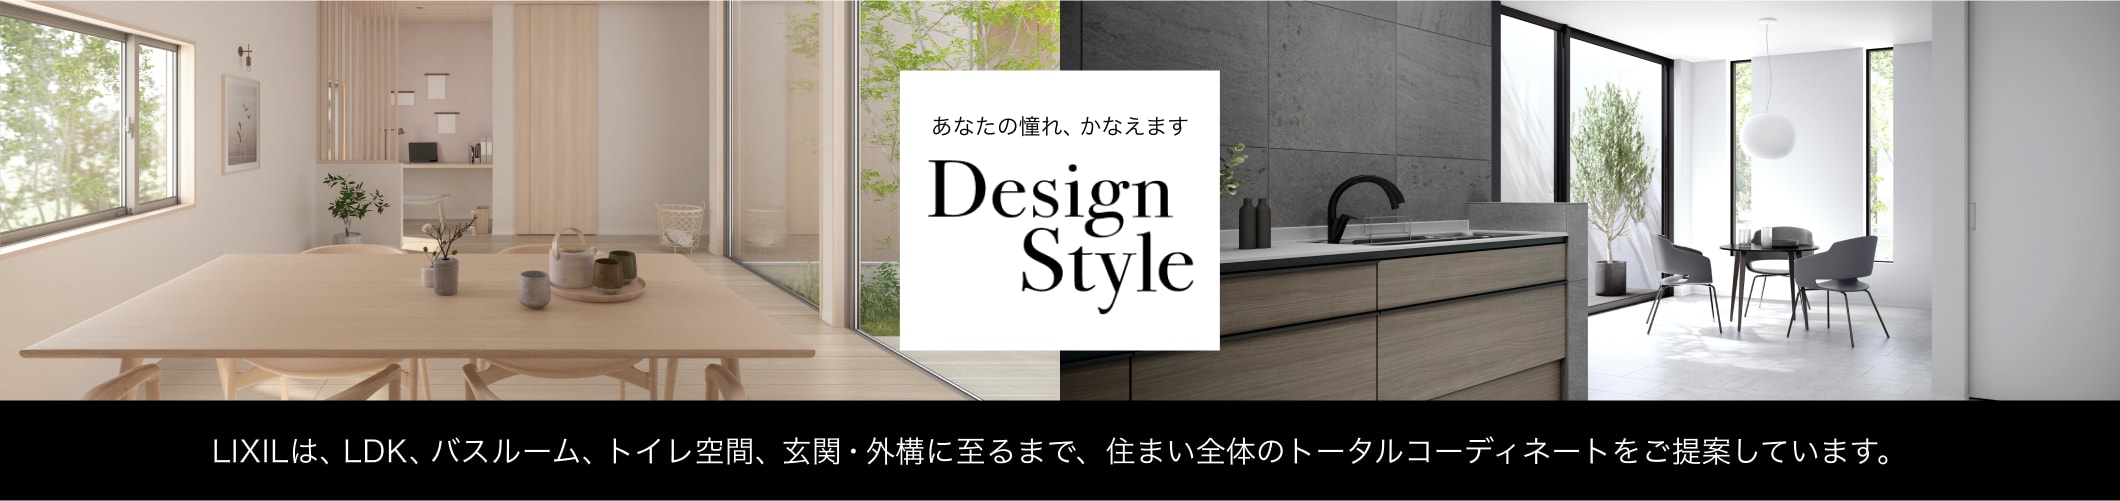 Ȃ̓AȂ܂ Design Style LIXIĹALDKAoX[AgCԁAցEO\Ɏ܂ŁAZ܂Ŝ̃g[^R[fBl[gĂĂ܂B